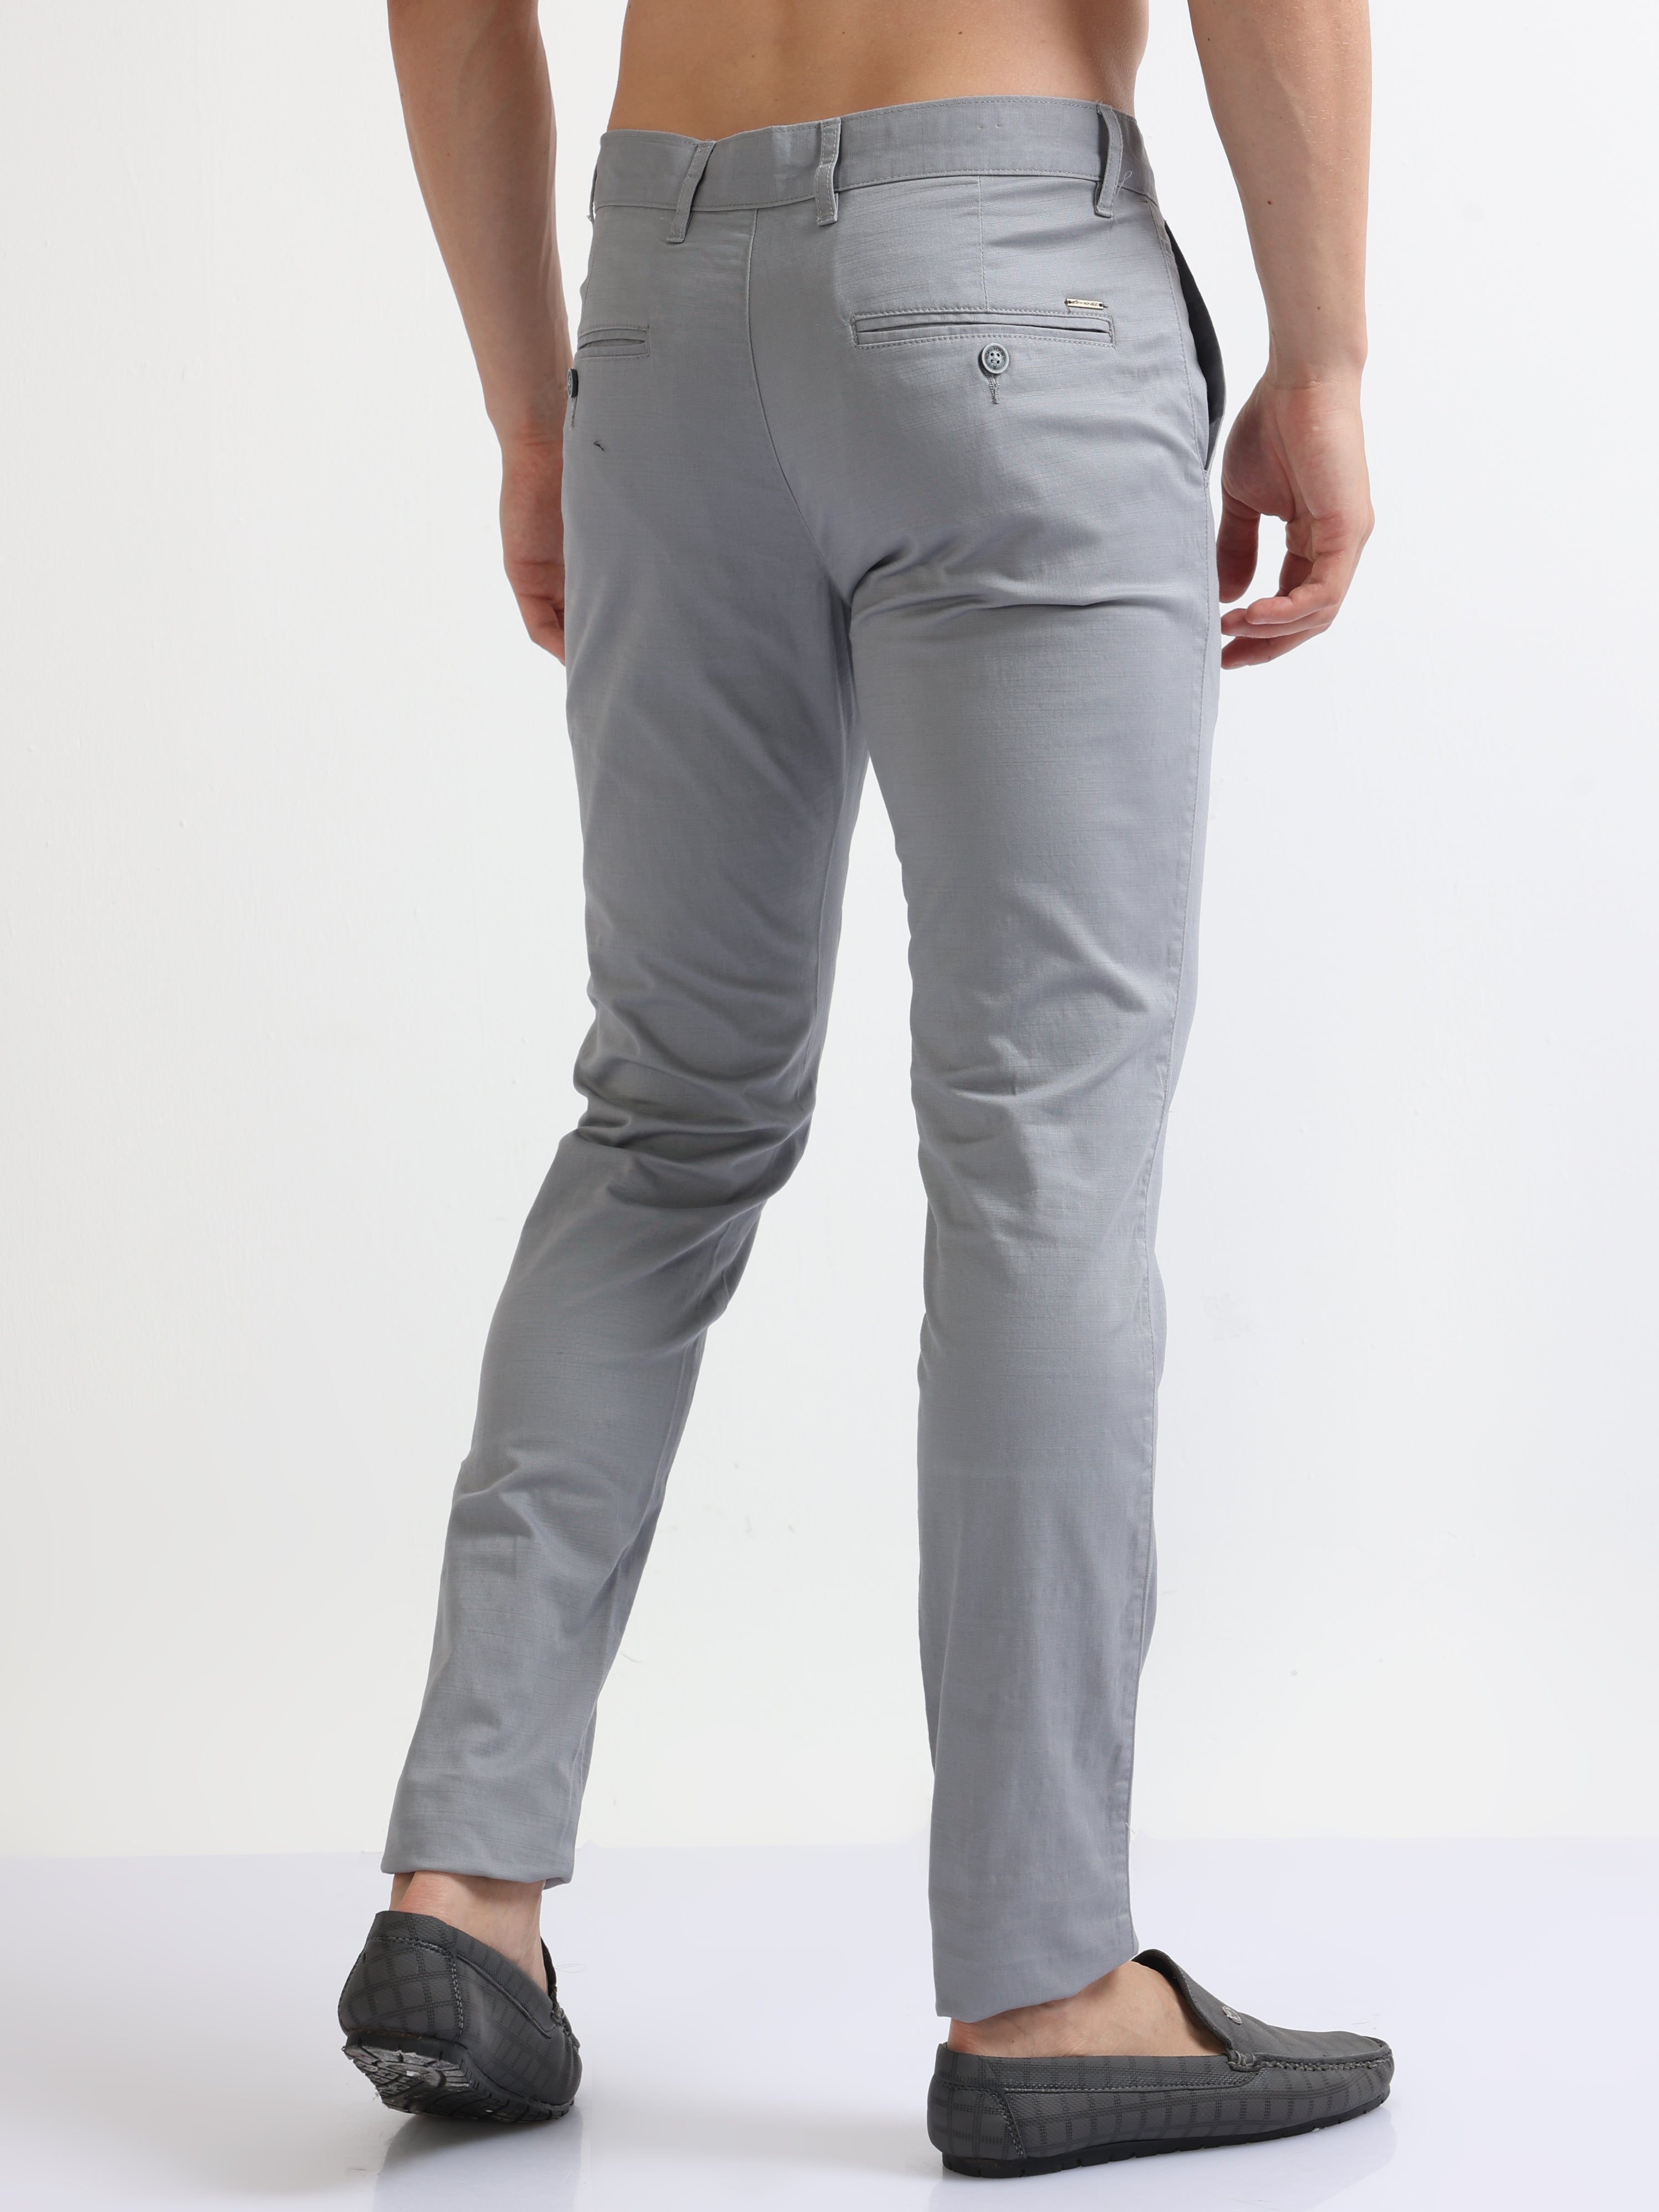 COOFANDY Men's Casual Linen Pants Elastic Waist Drawstring Cotton Trousers  | eBay